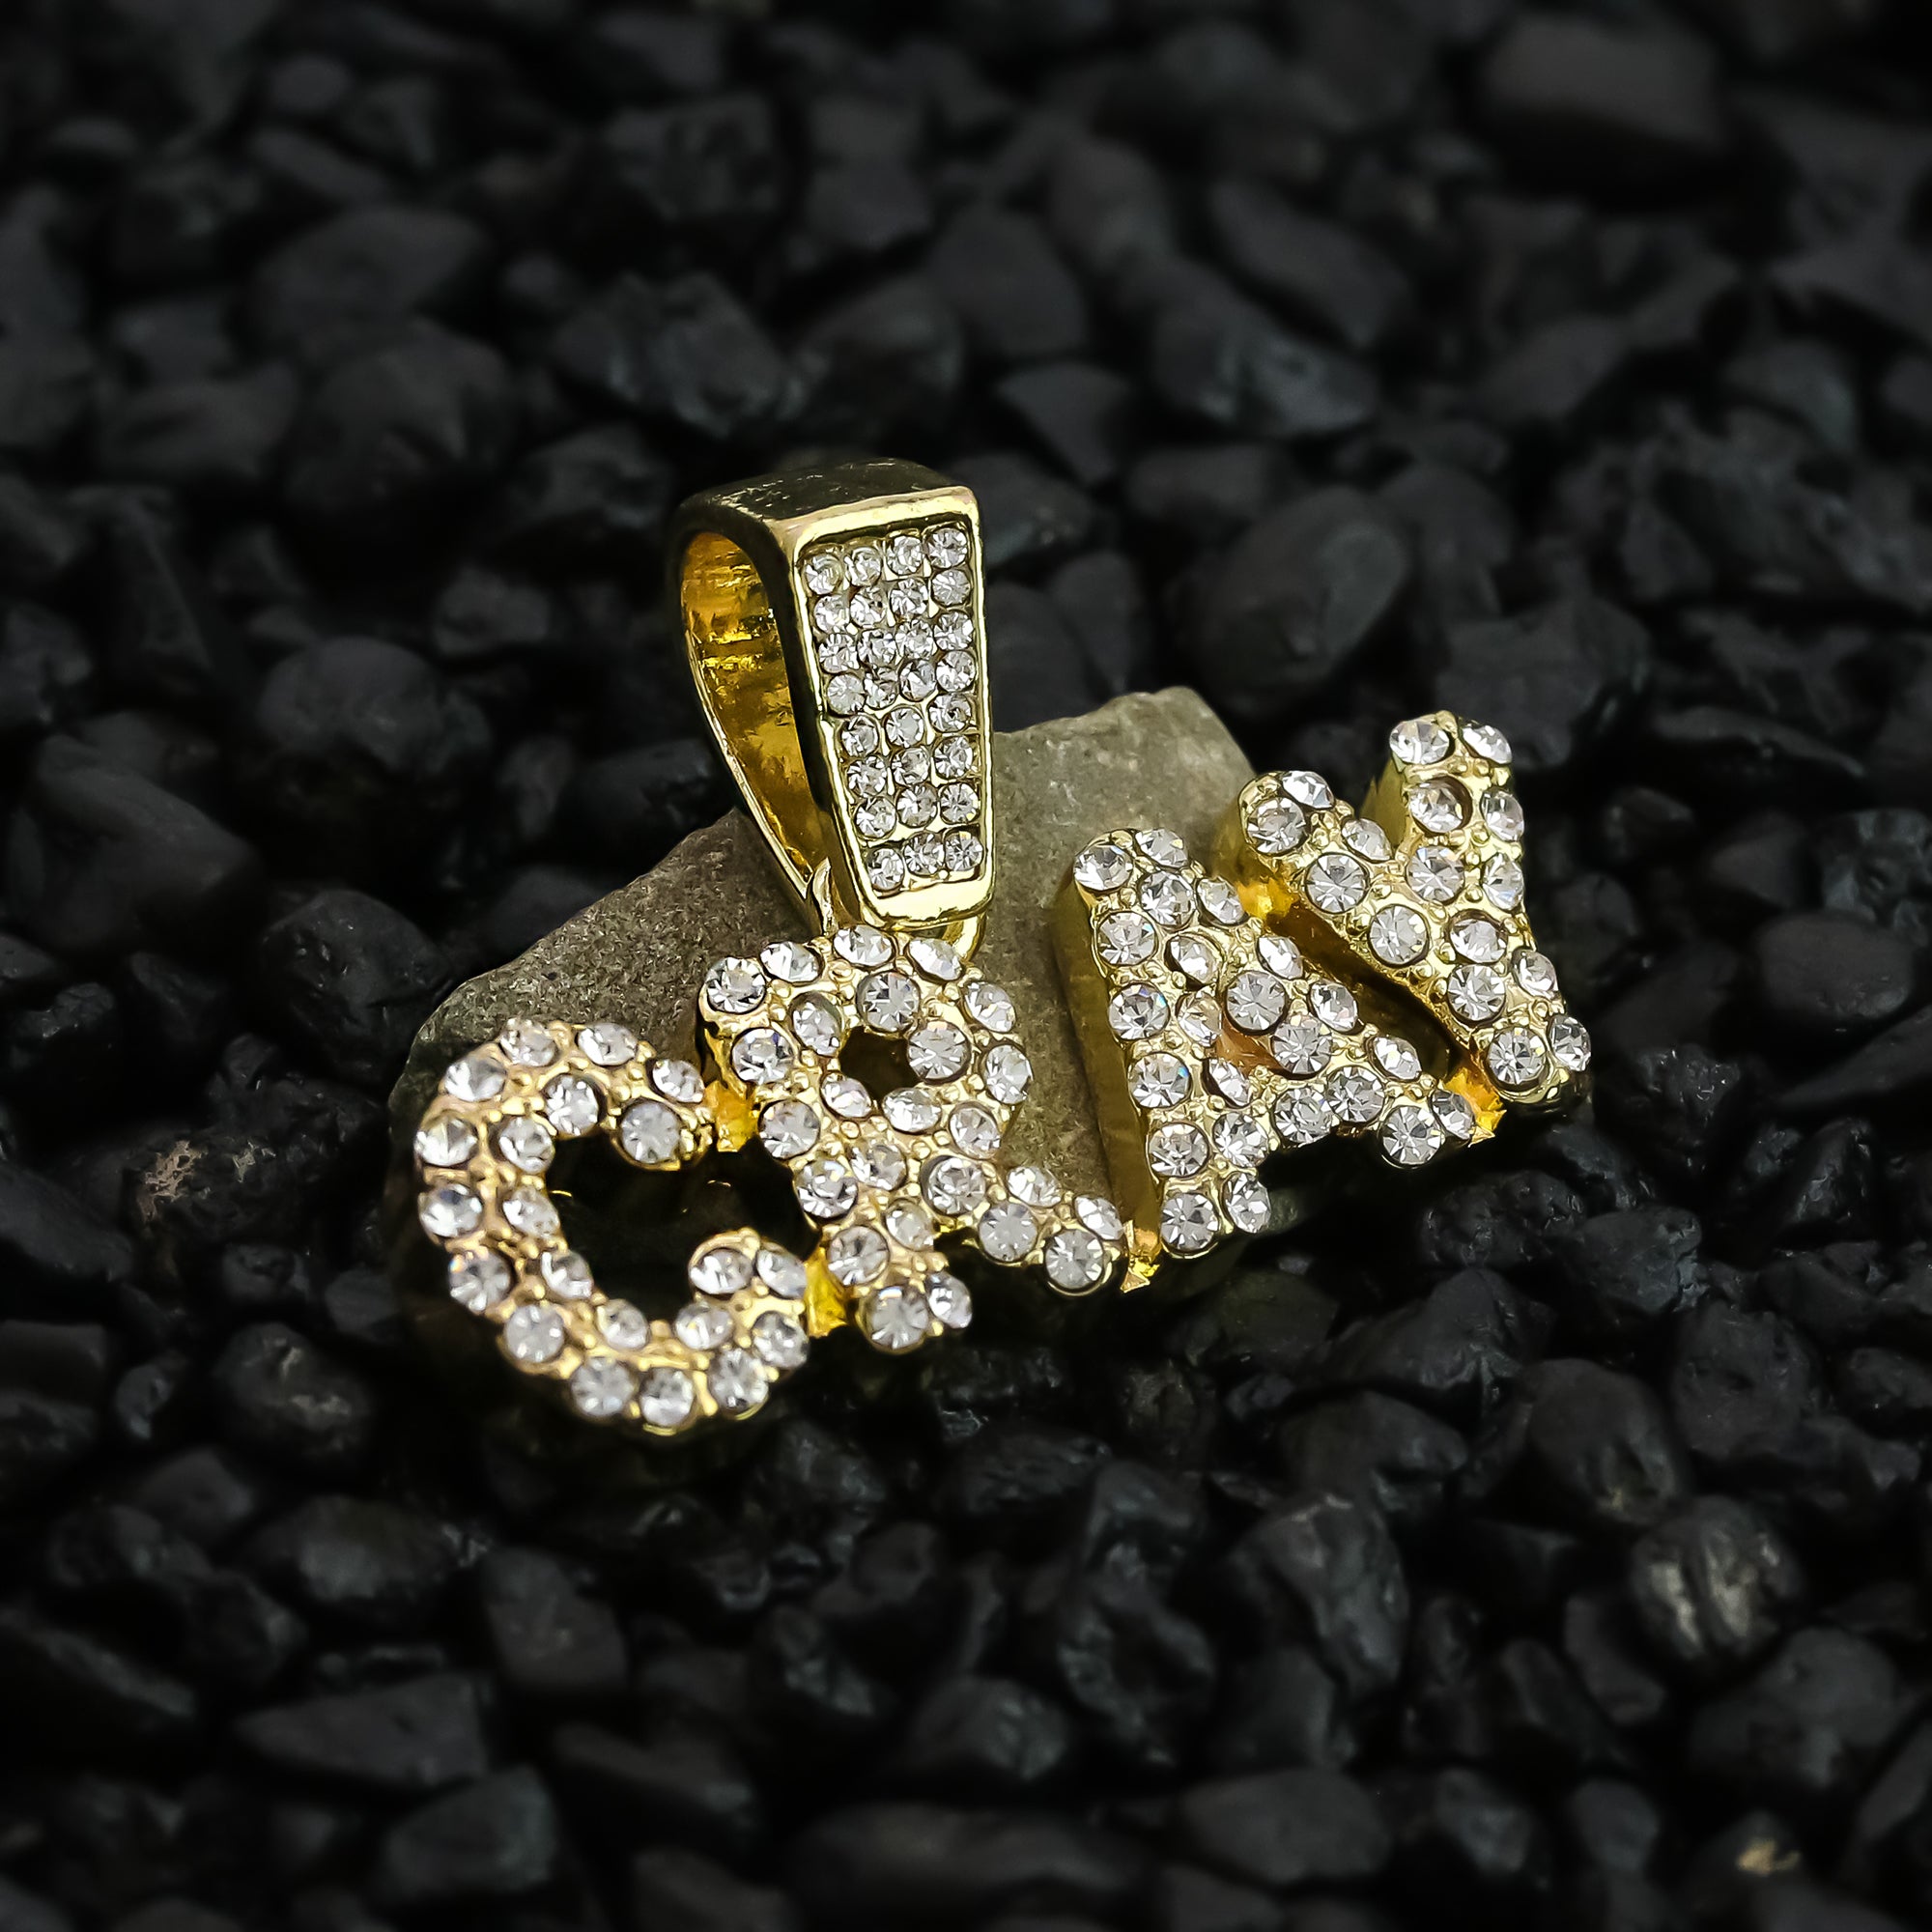 Cray Pendant Rope Chain Men's Hip Hop 18k Cz Jewelry Necklace